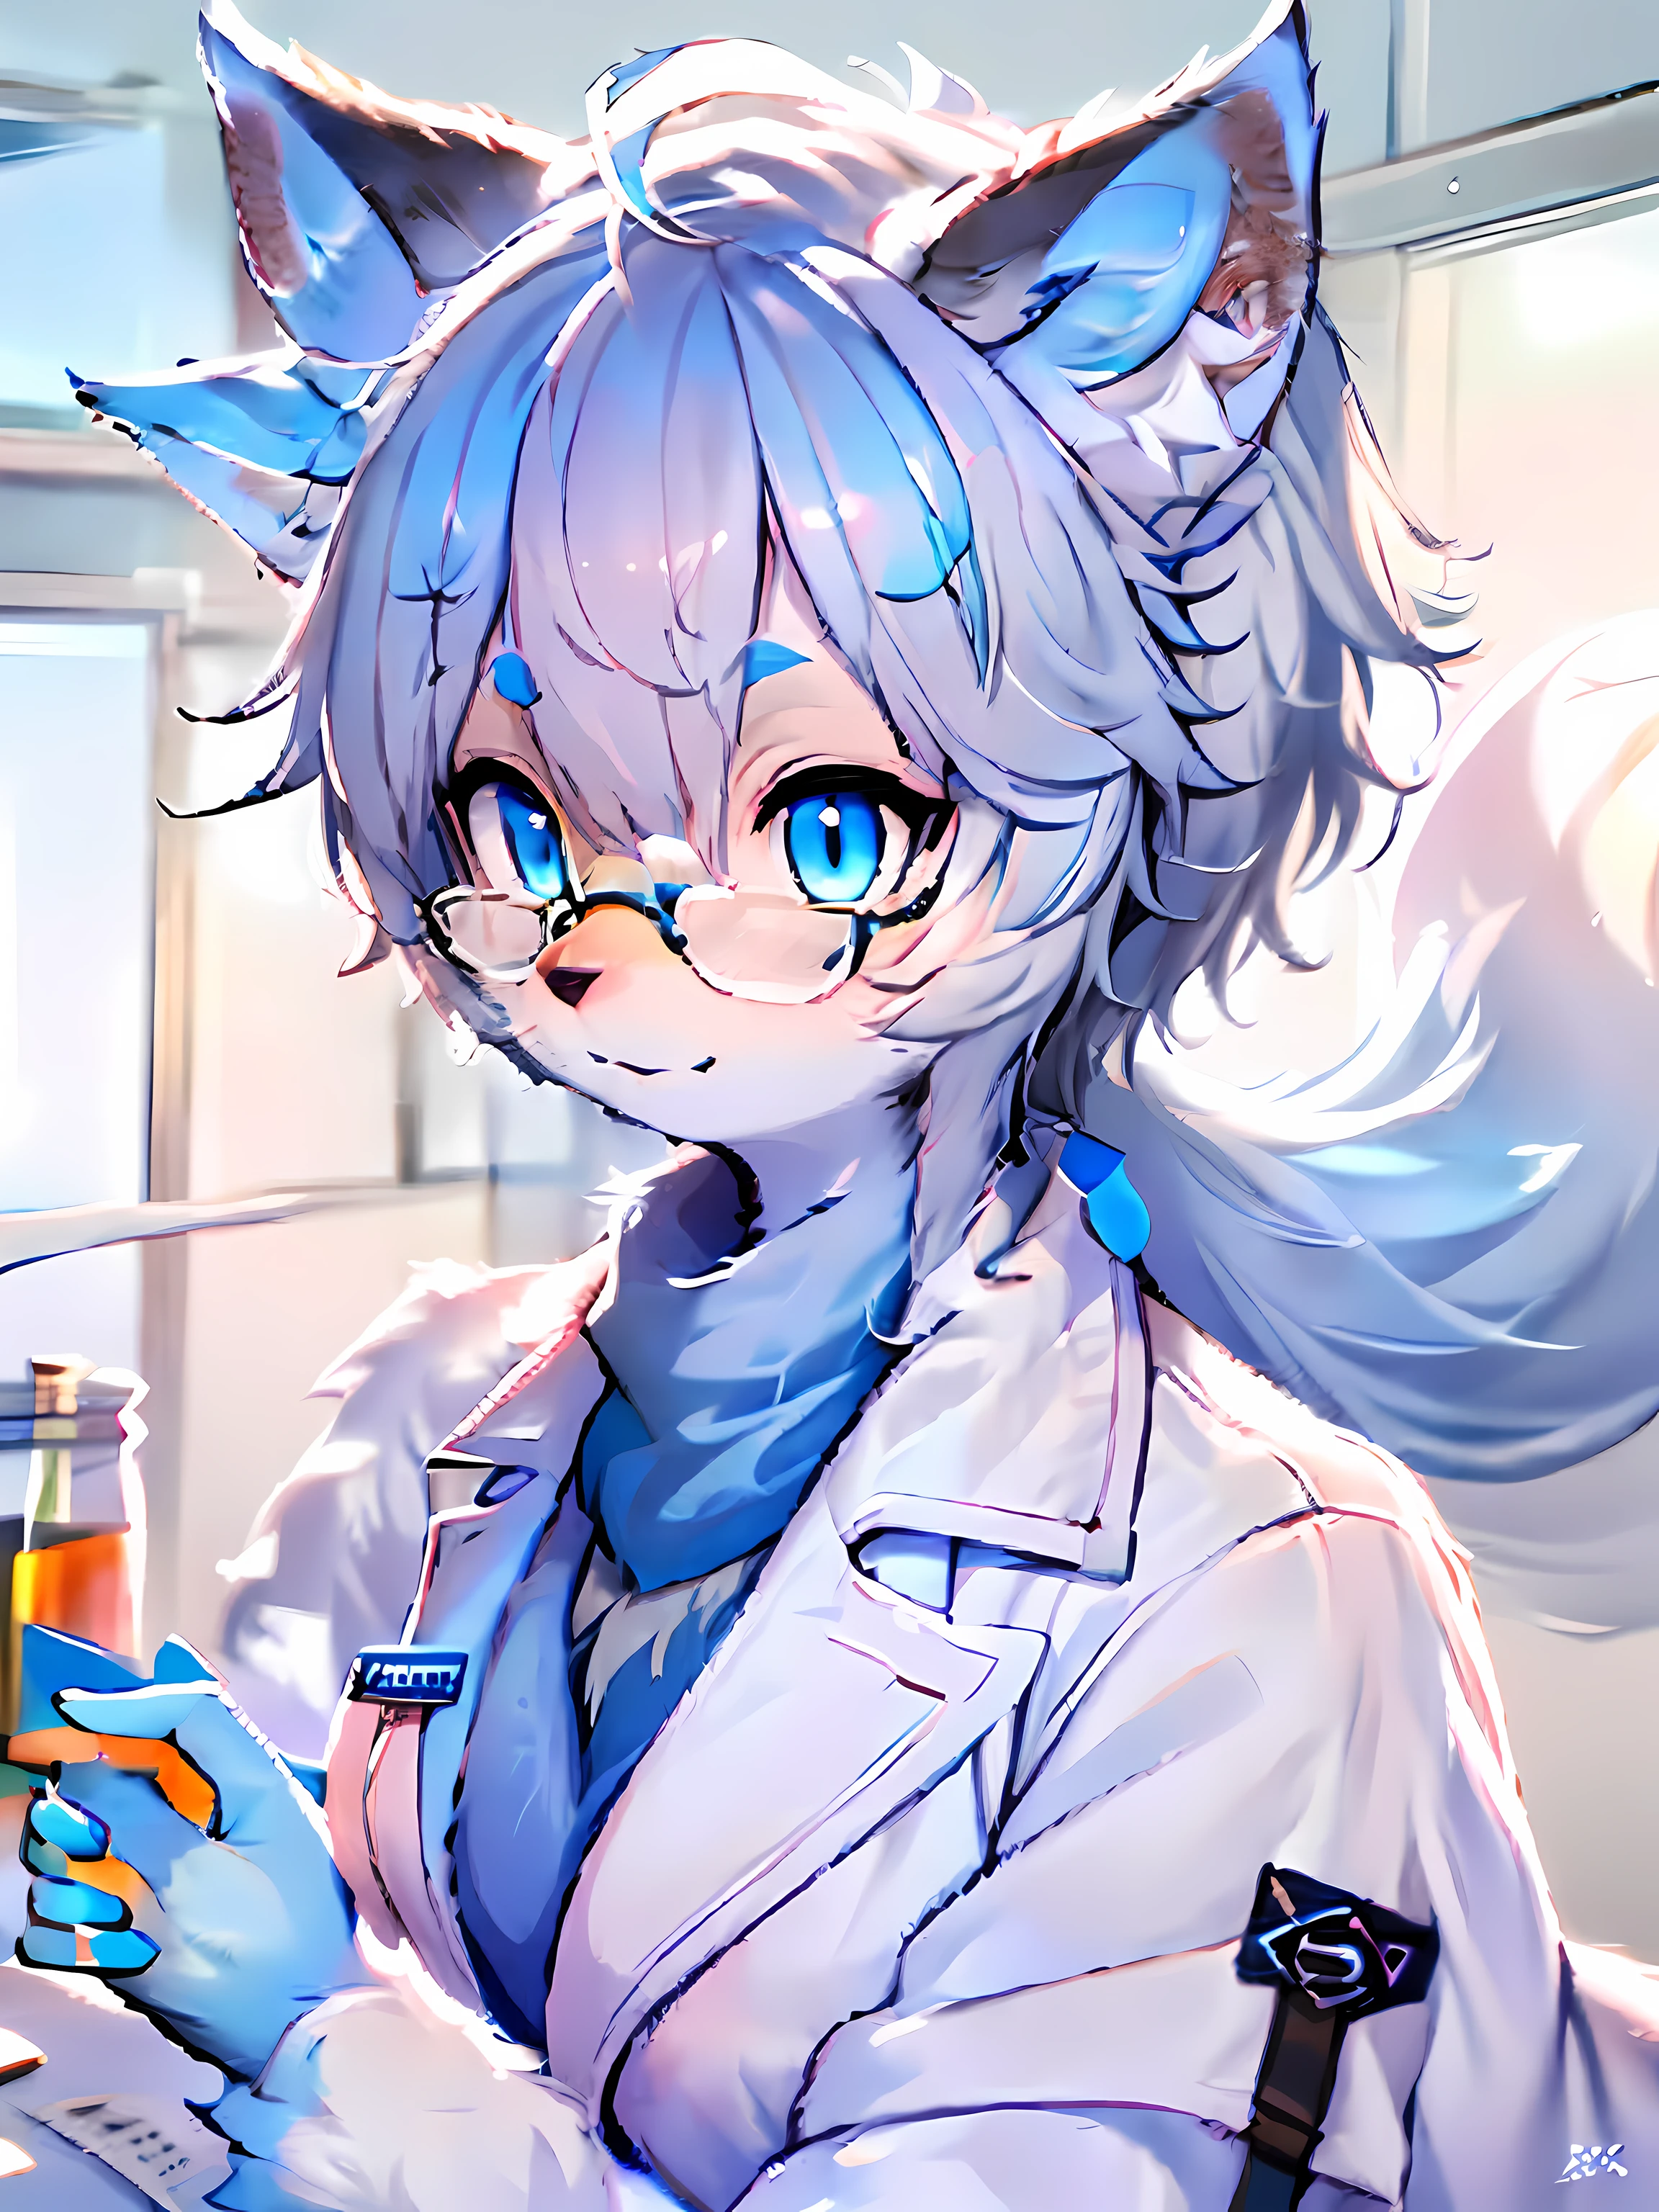 Anime character with 白狐 ears wearing lab coat and blue scarf,白狐，蓬松的蓝色皮毛和蓝色尾巴,戴半框眼镜,穿着白大褂的北极狐美女,  狐狸科学家，实验室内部, 专业毛茸茸绘画